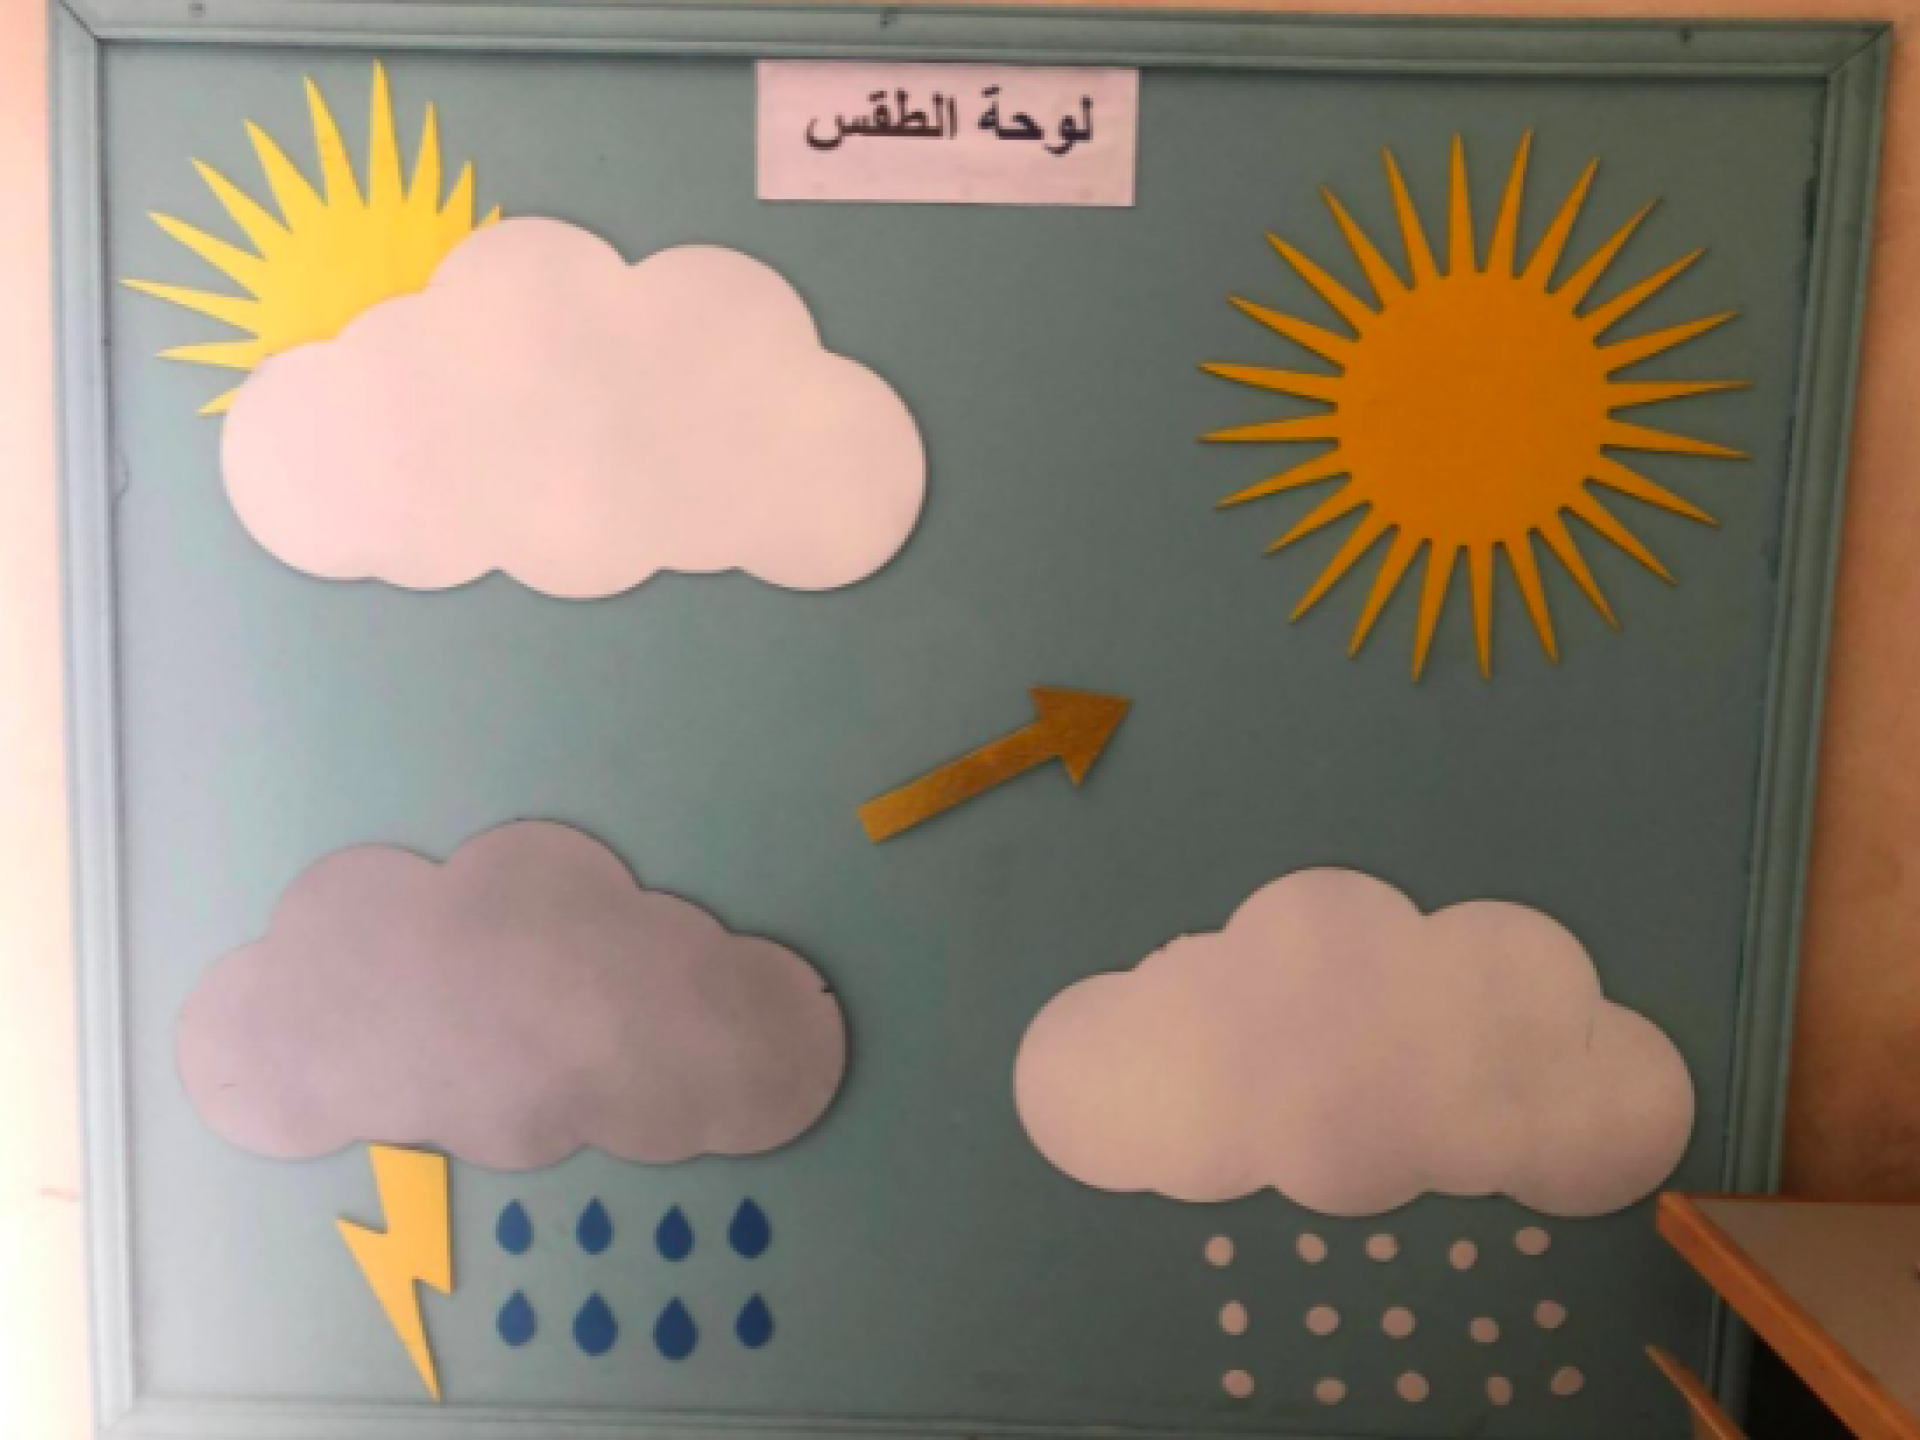 Felt-board showing weather patterns, rain, clouds, etc.